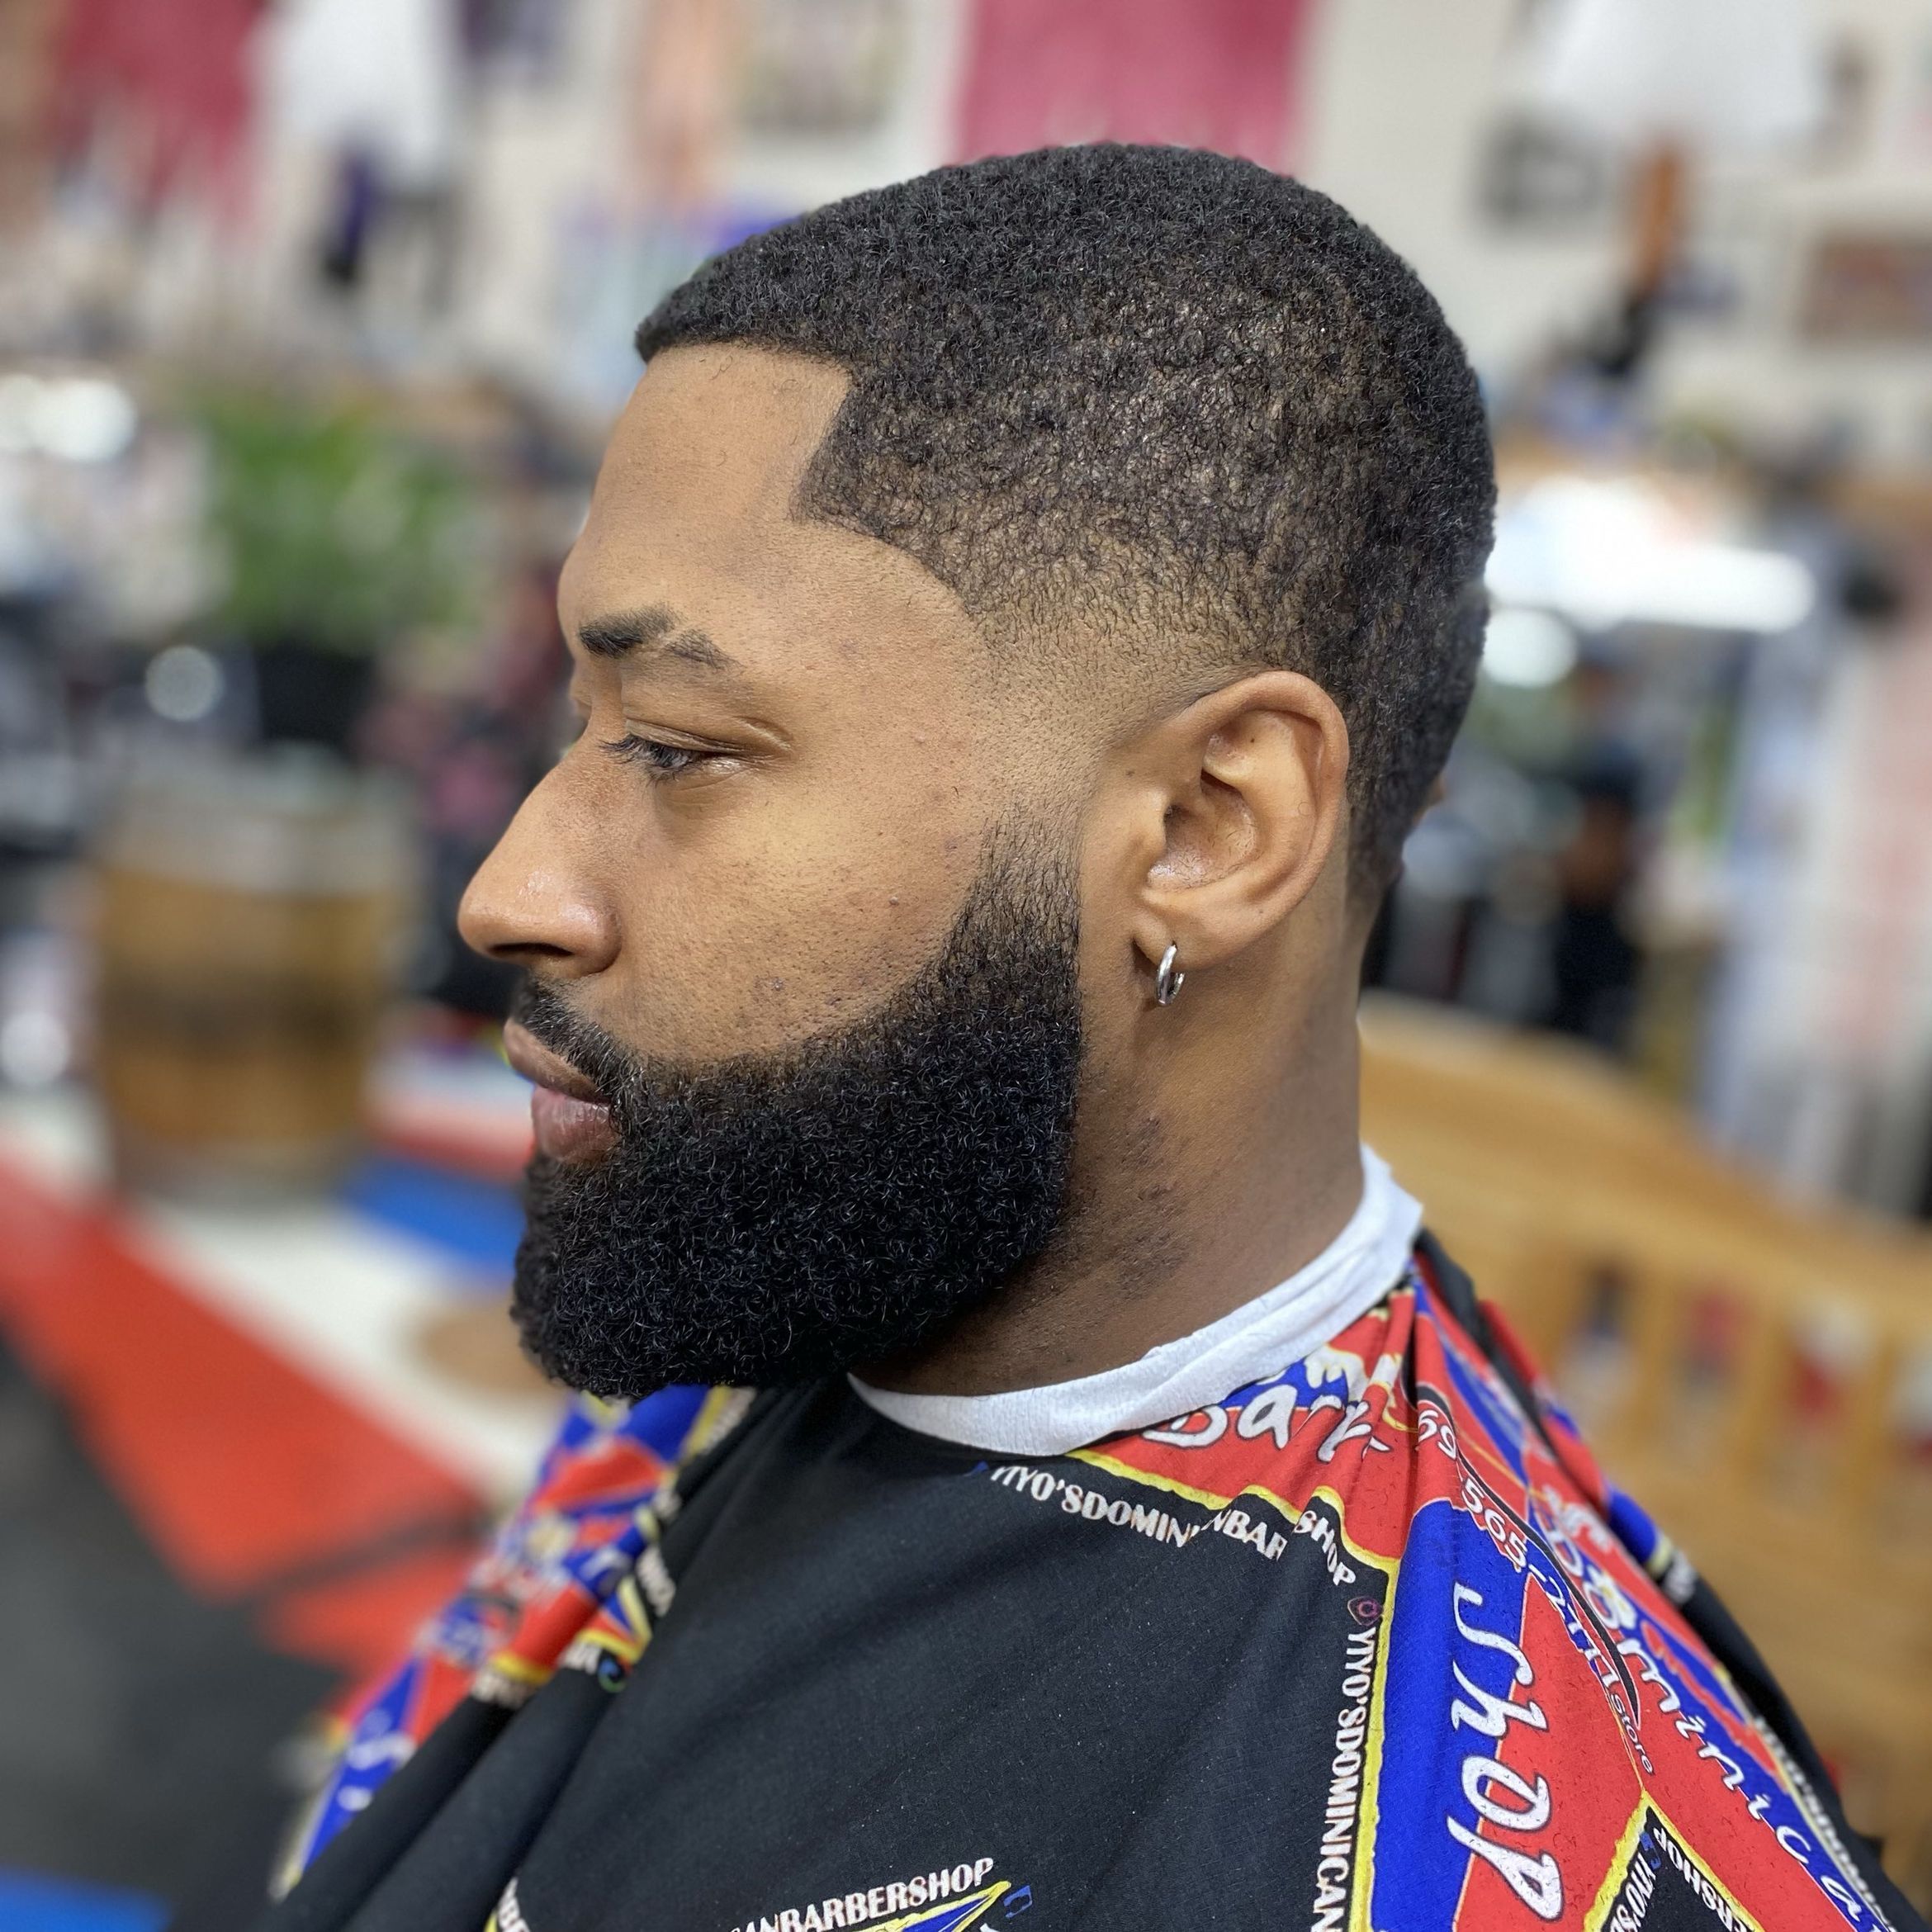 Corte barba /Cut and beard portfolio